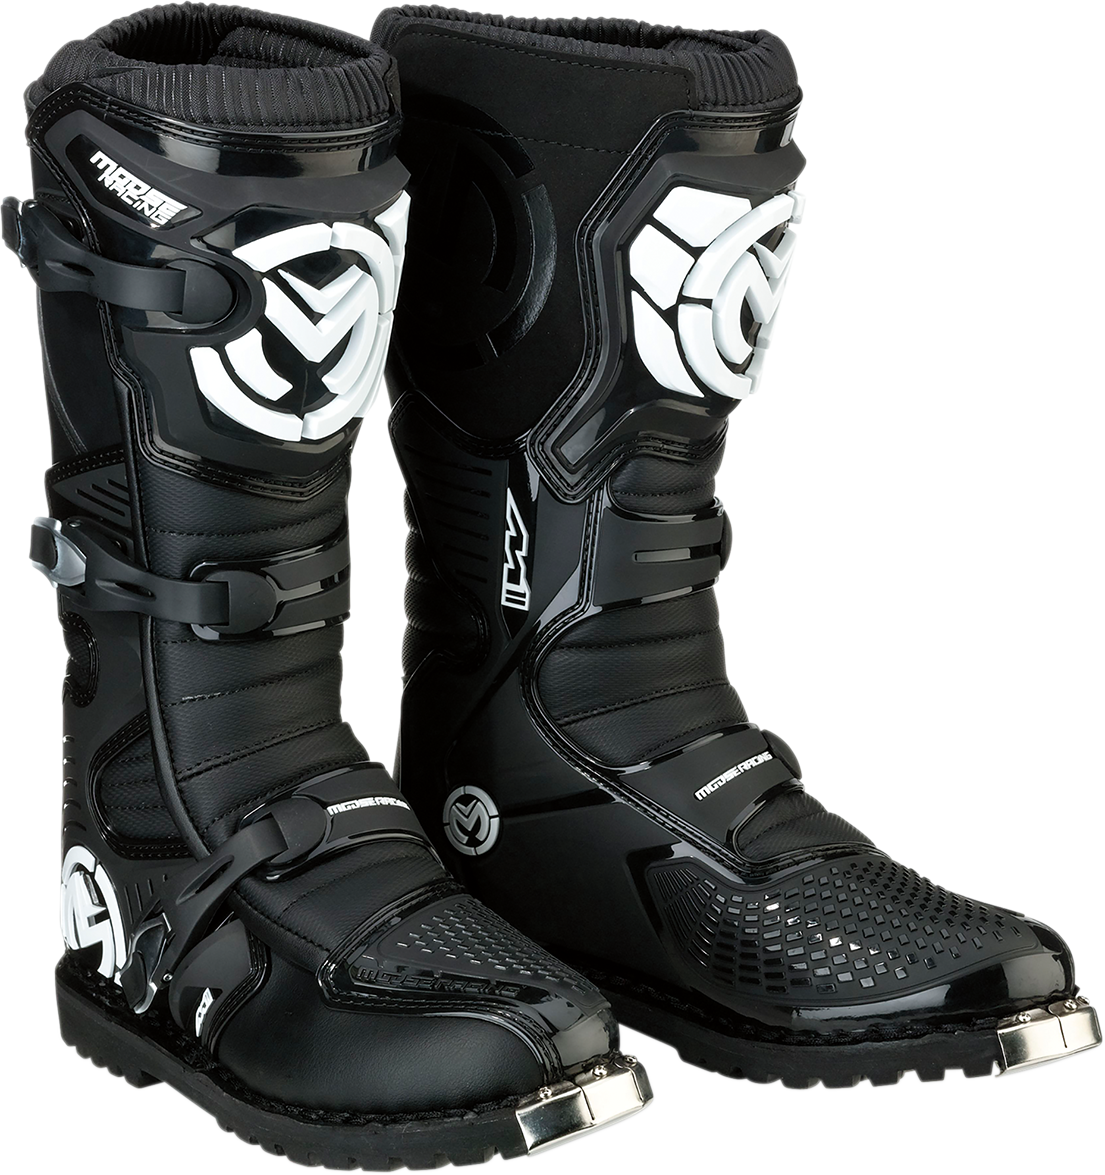 MOOSE RACING M1.3 ATV Boots - Black/White - Size 15 3410-2005